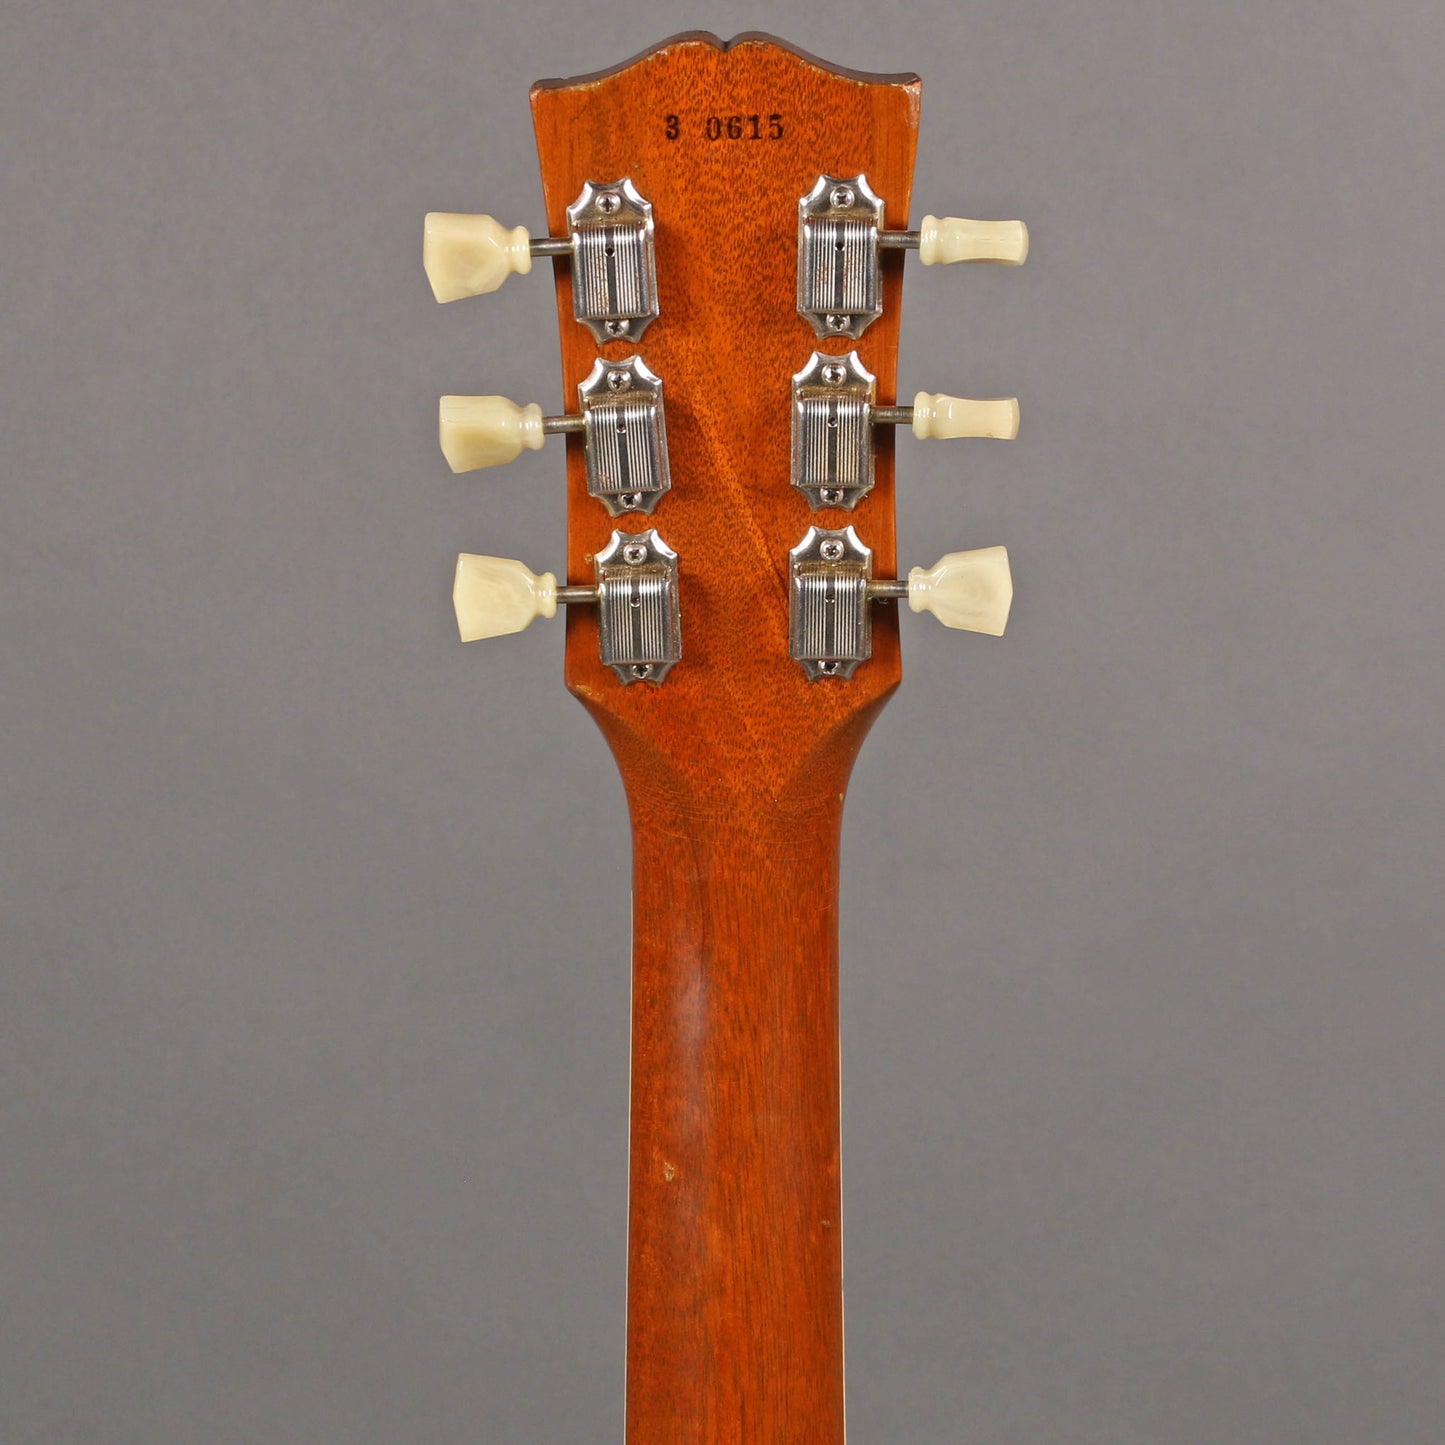 1953 Gibson Les Paul Goldtop